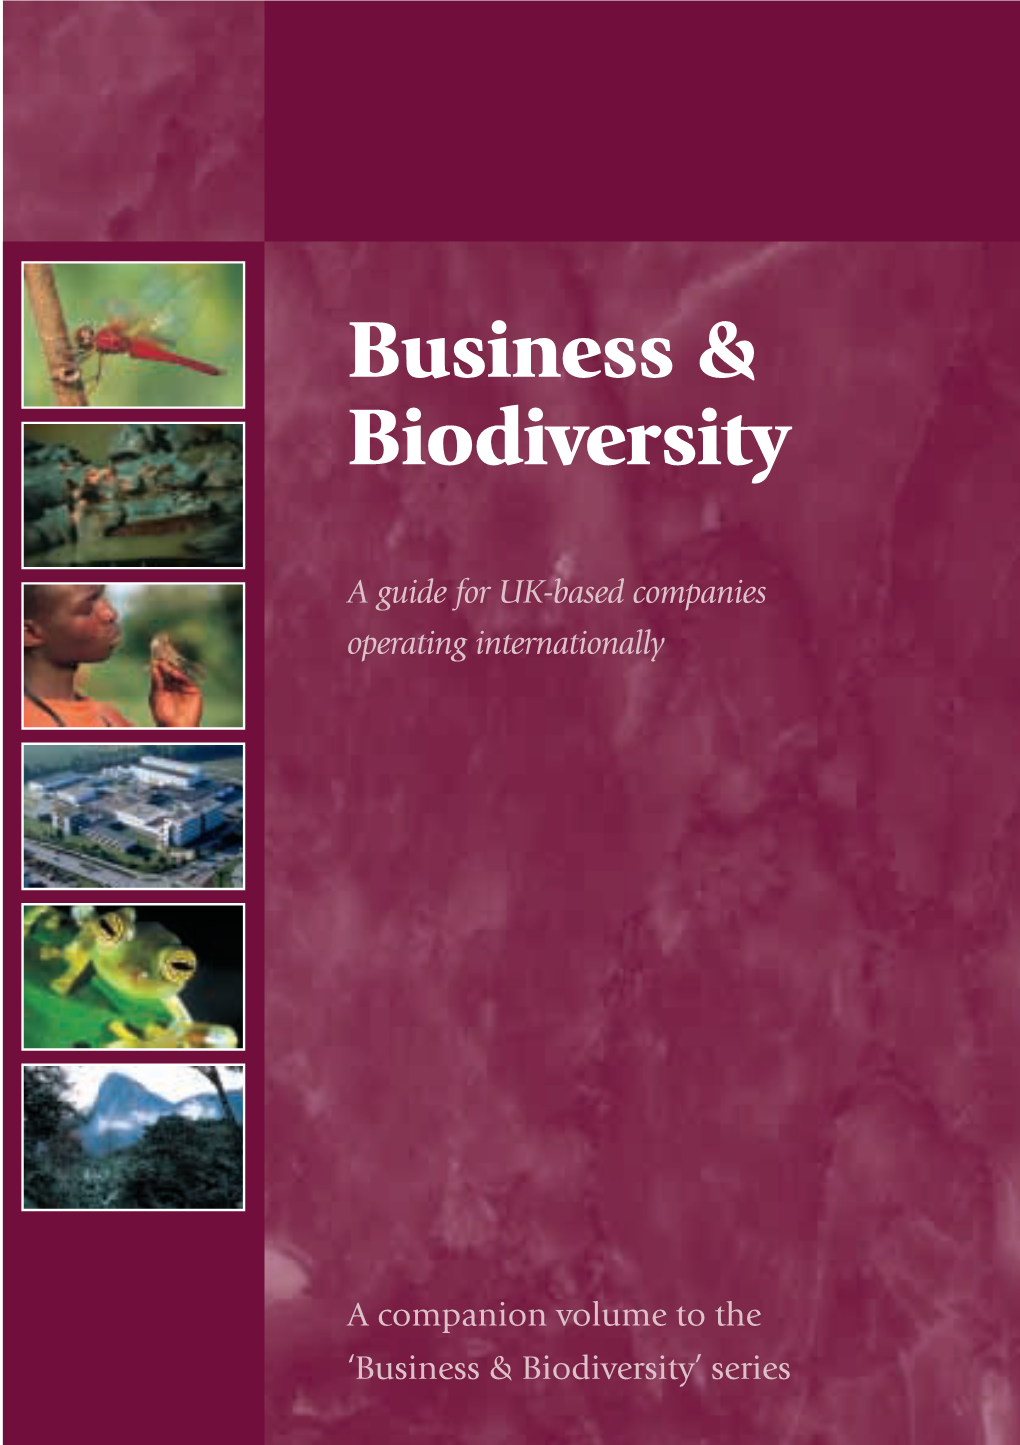 Earthwatch Business & Biodiversity